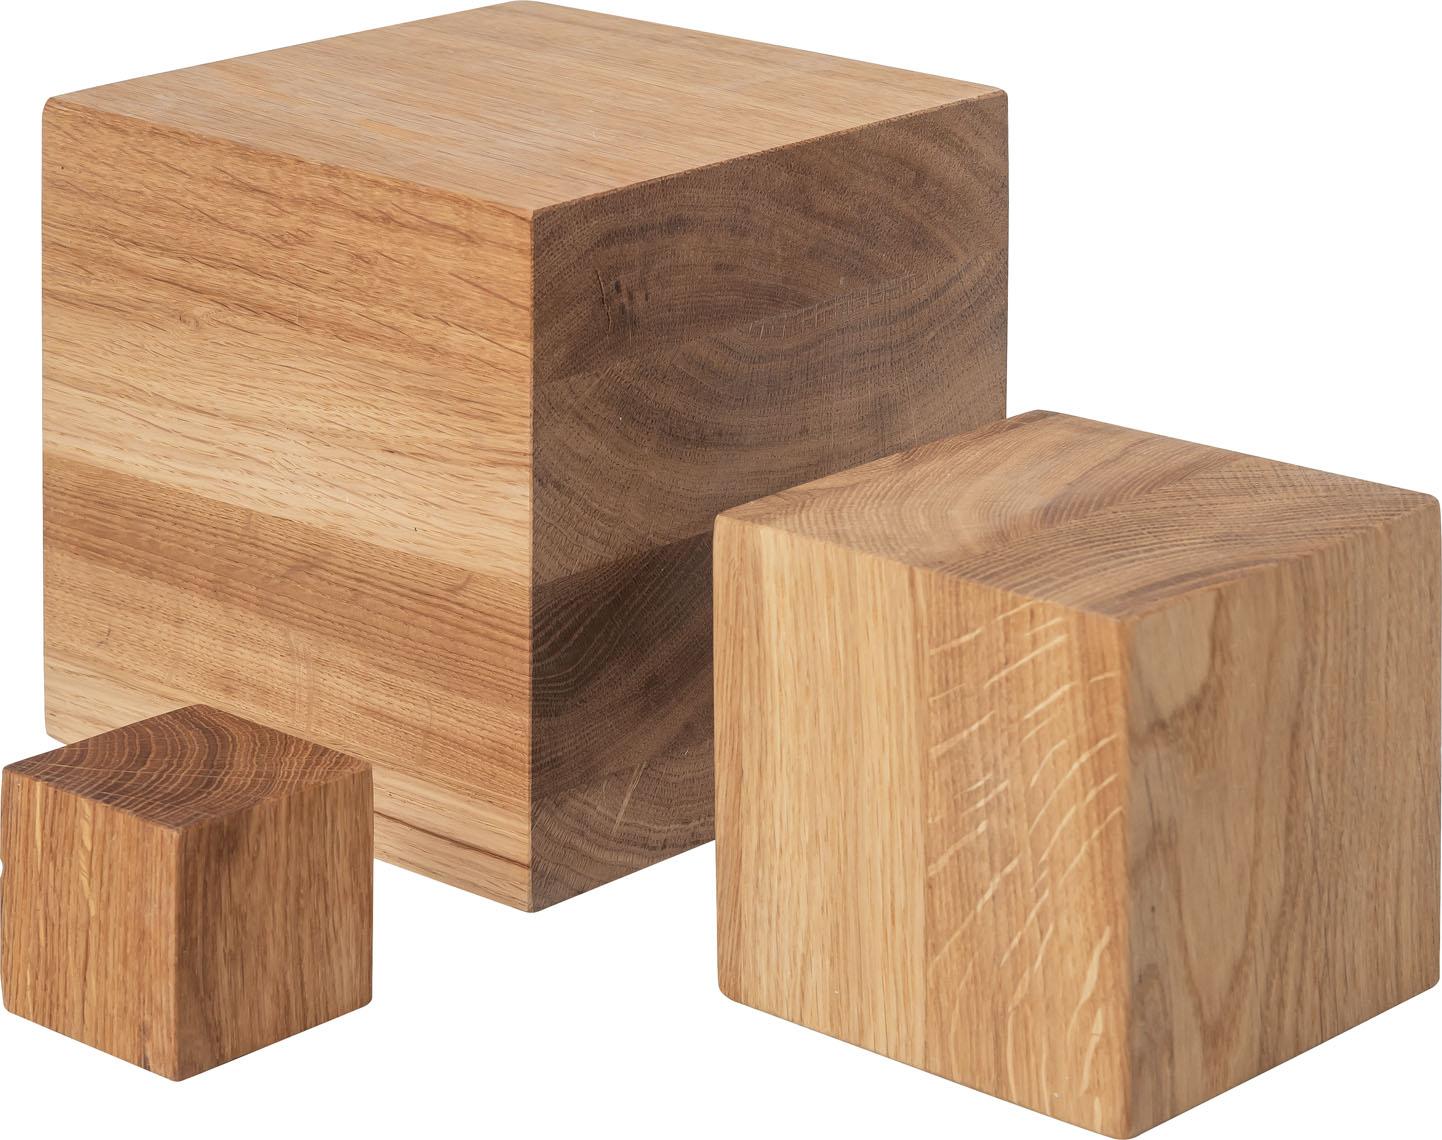 Wooden blocks set of 3 pcs.